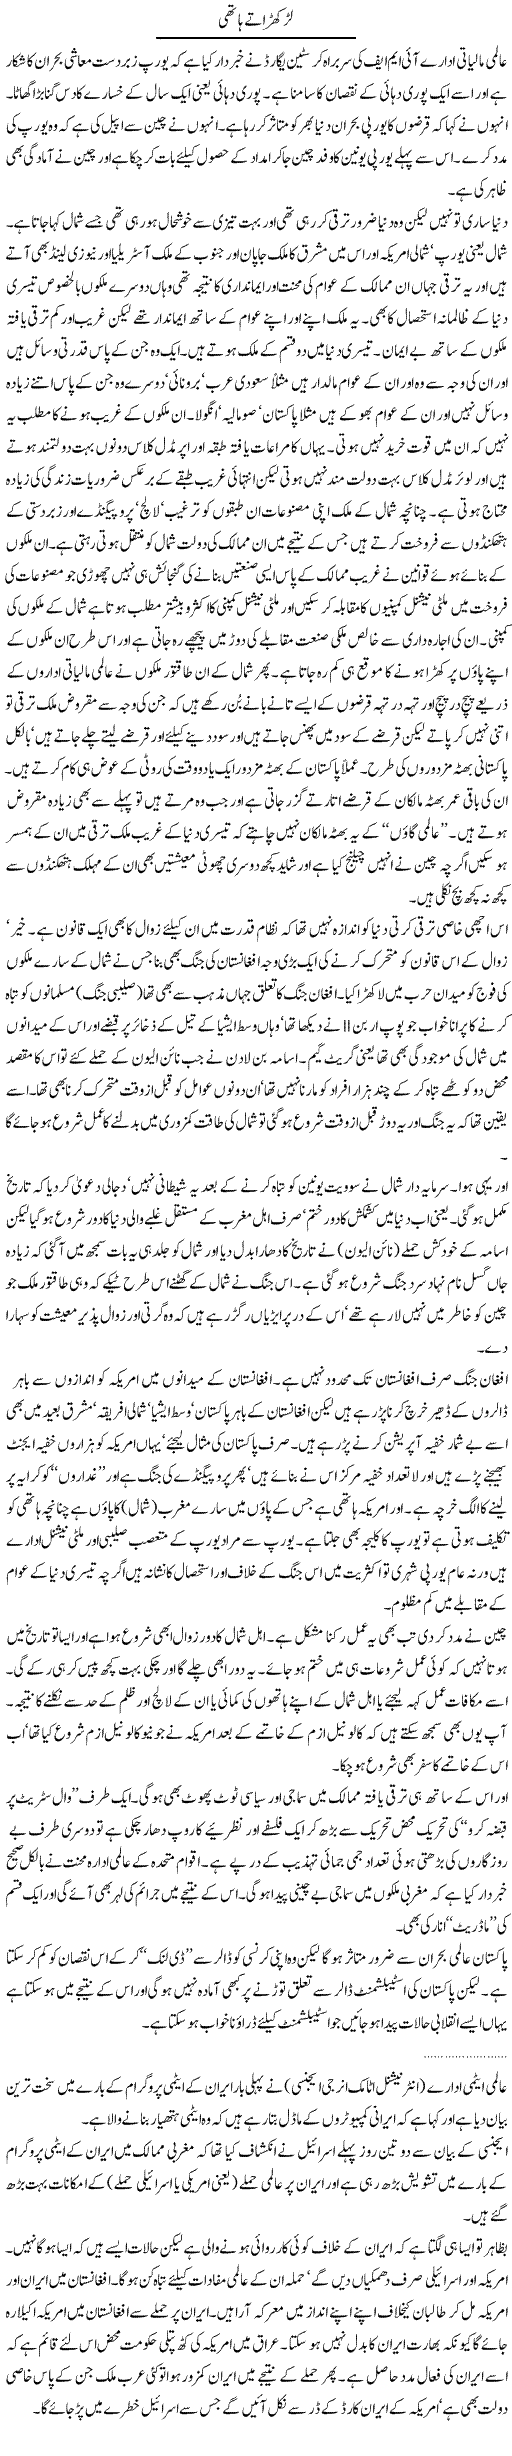 Western Economy Express Column Abdullah Tariq 10 November 2011